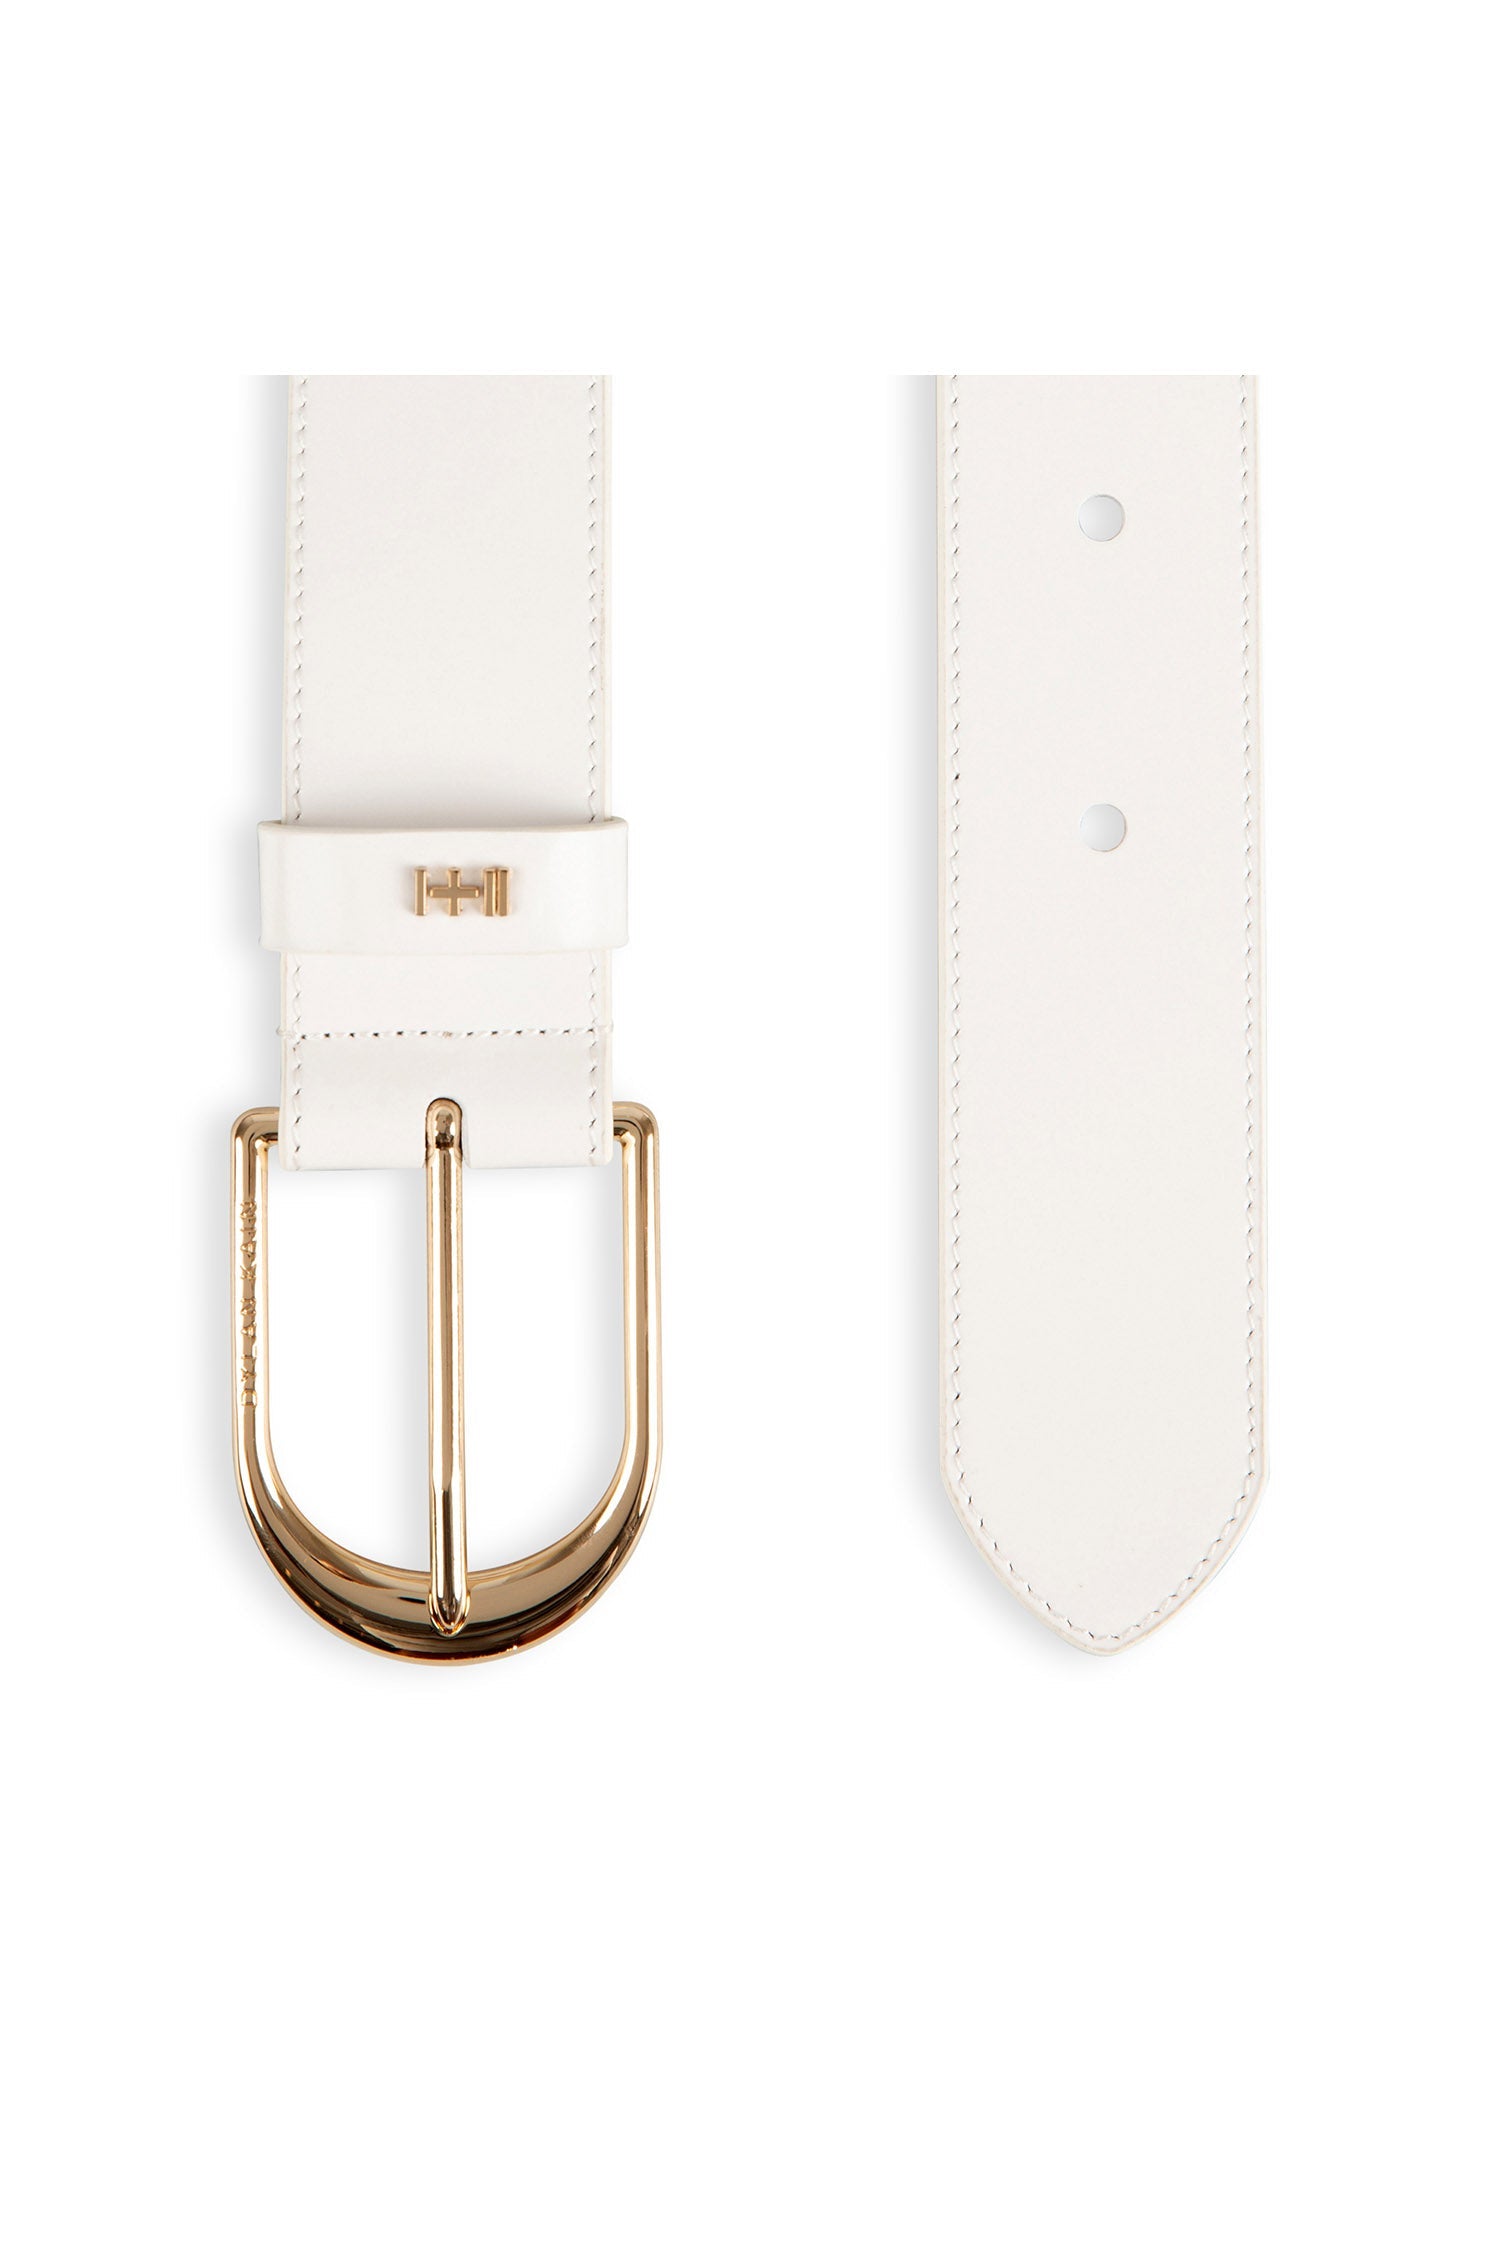 The Nika Lux Belt White - Gift Edit